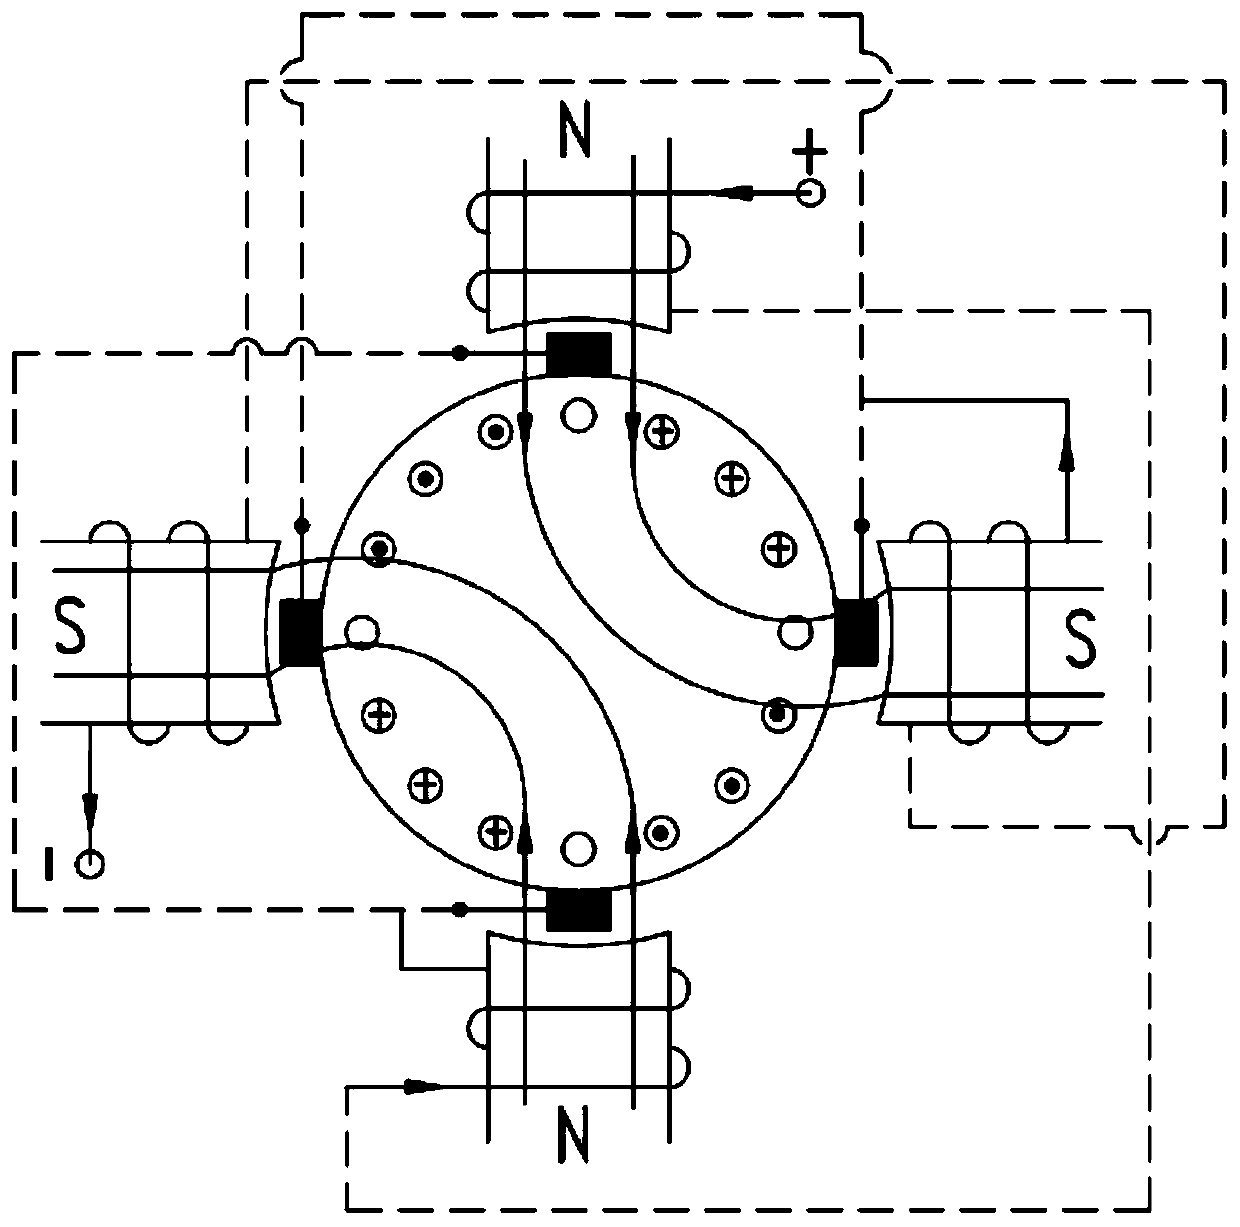 Novel flat single-phase four-pole series motor